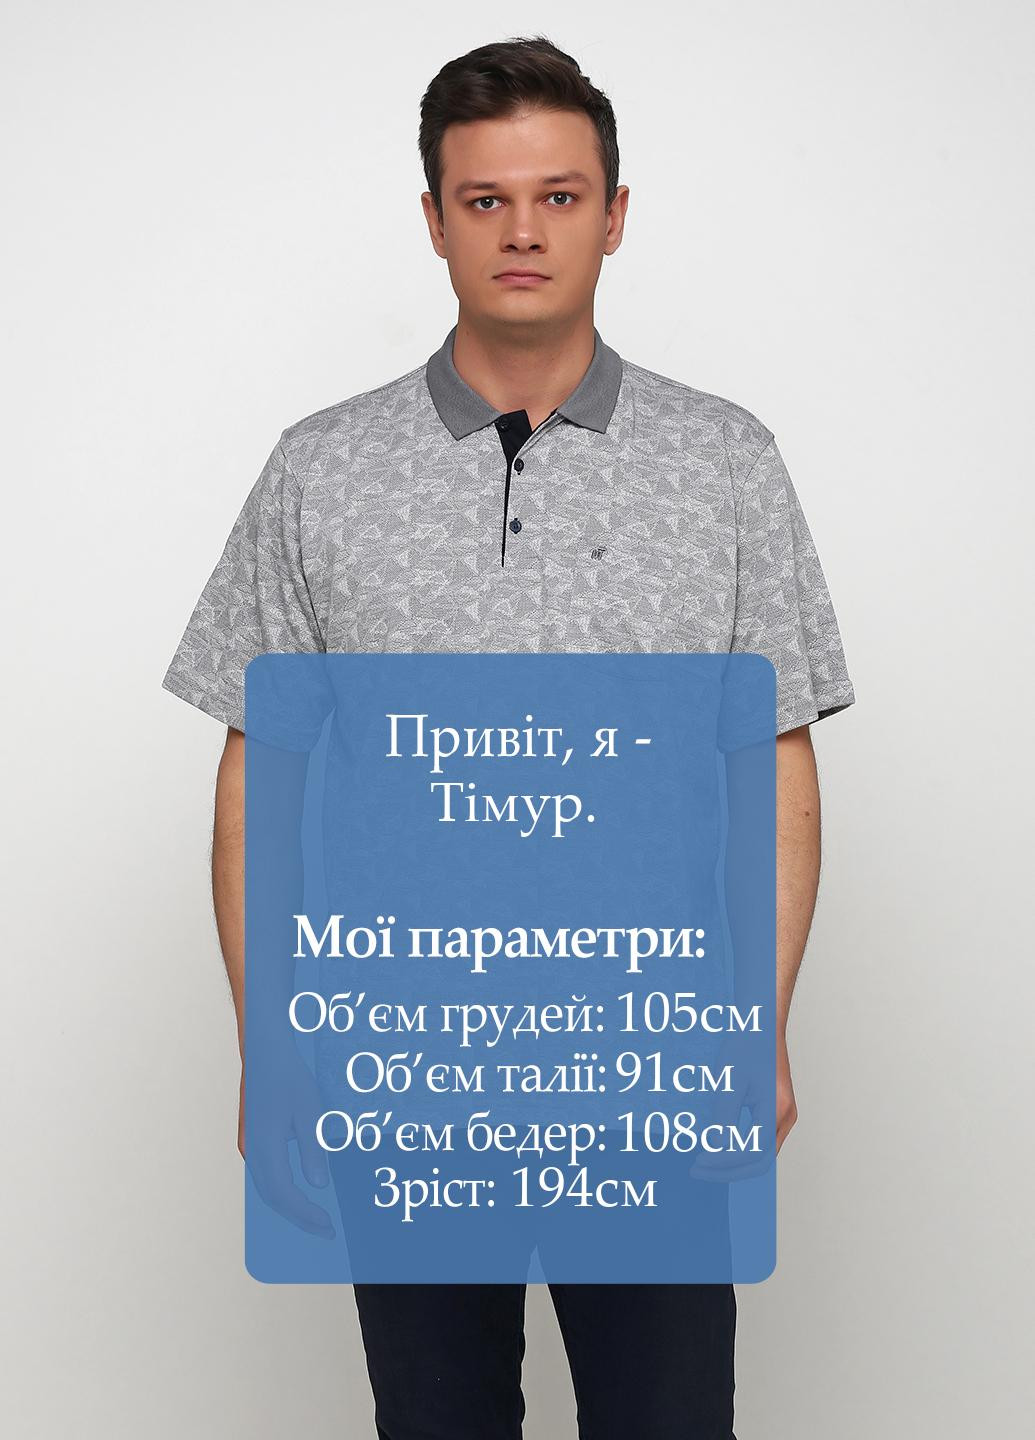 Серая футболка-поло для мужчин Vip Ston с орнаментом